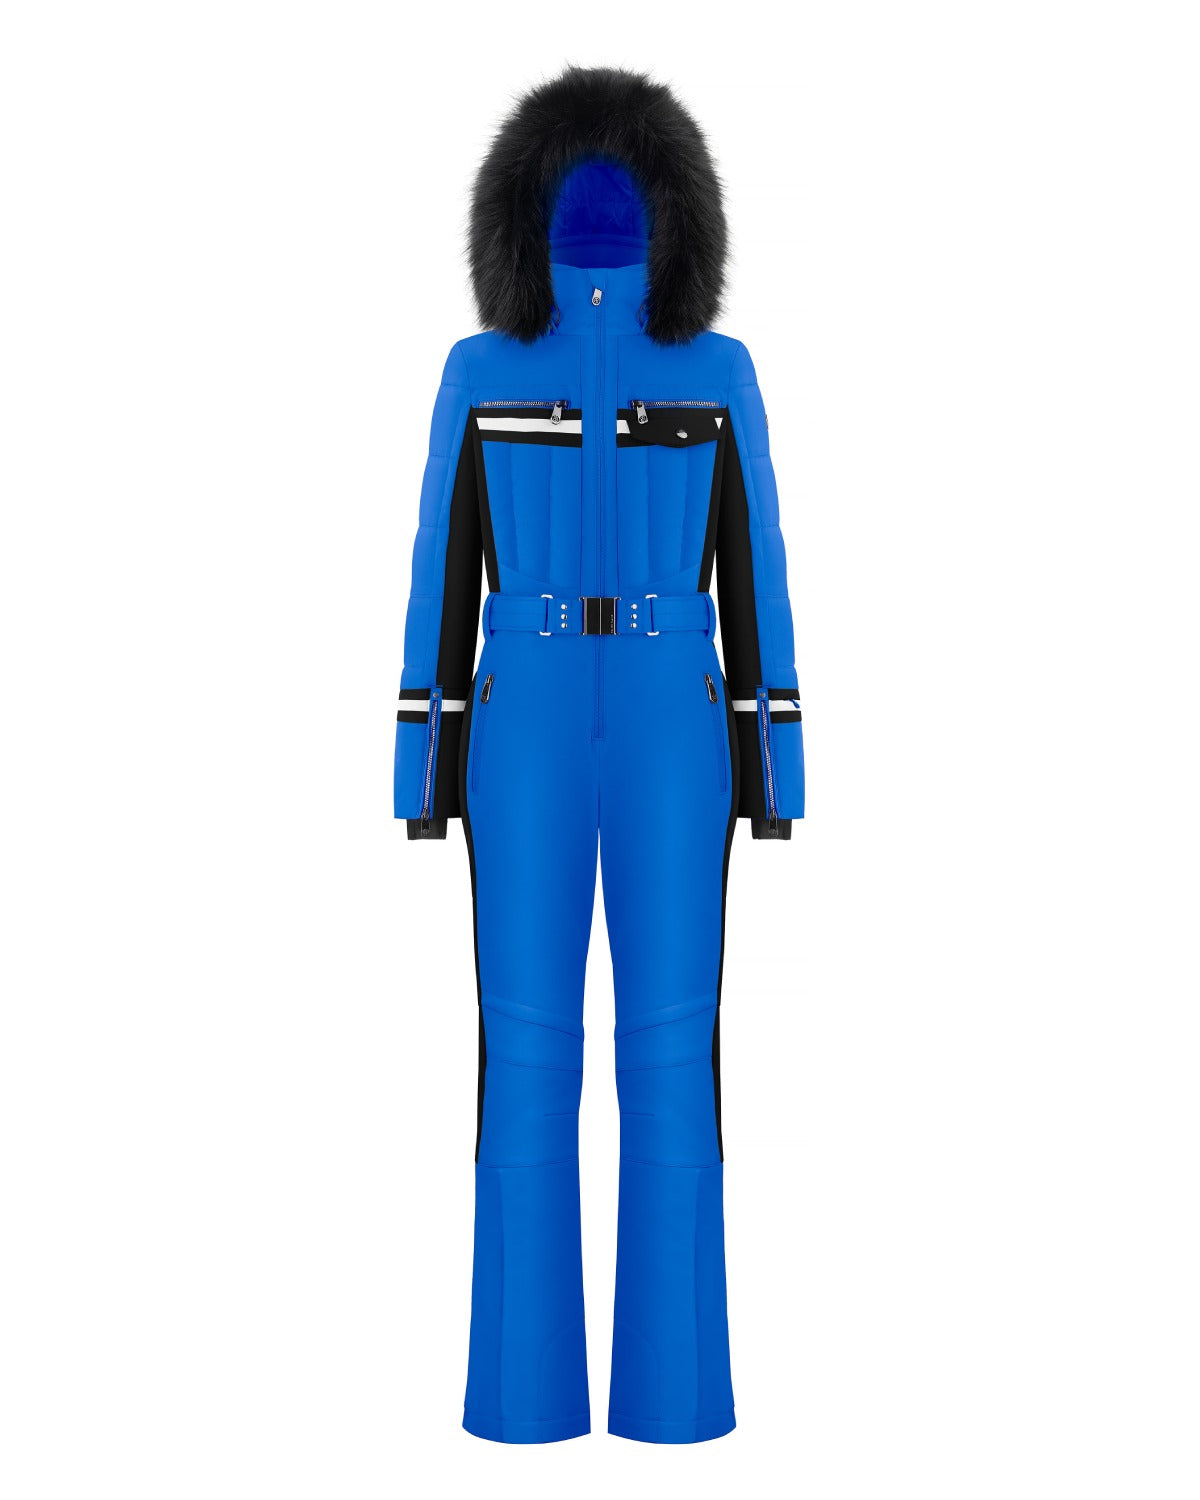 Poivre Blanc Women's Stretch Ski Suit in King Blue